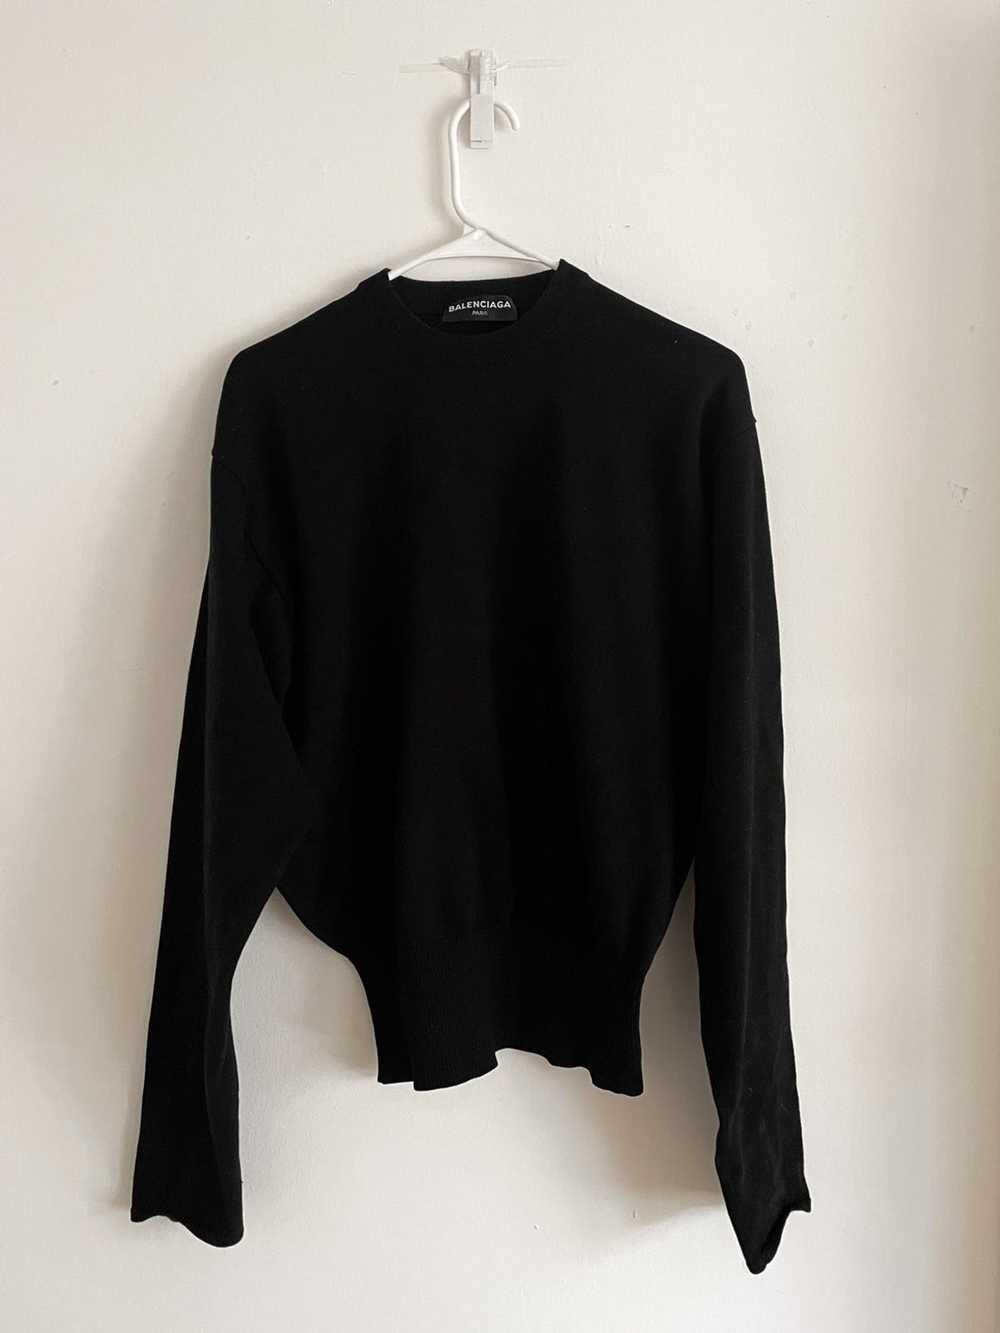 Balenciaga SS17 Cropped Knit Sweater - image 1